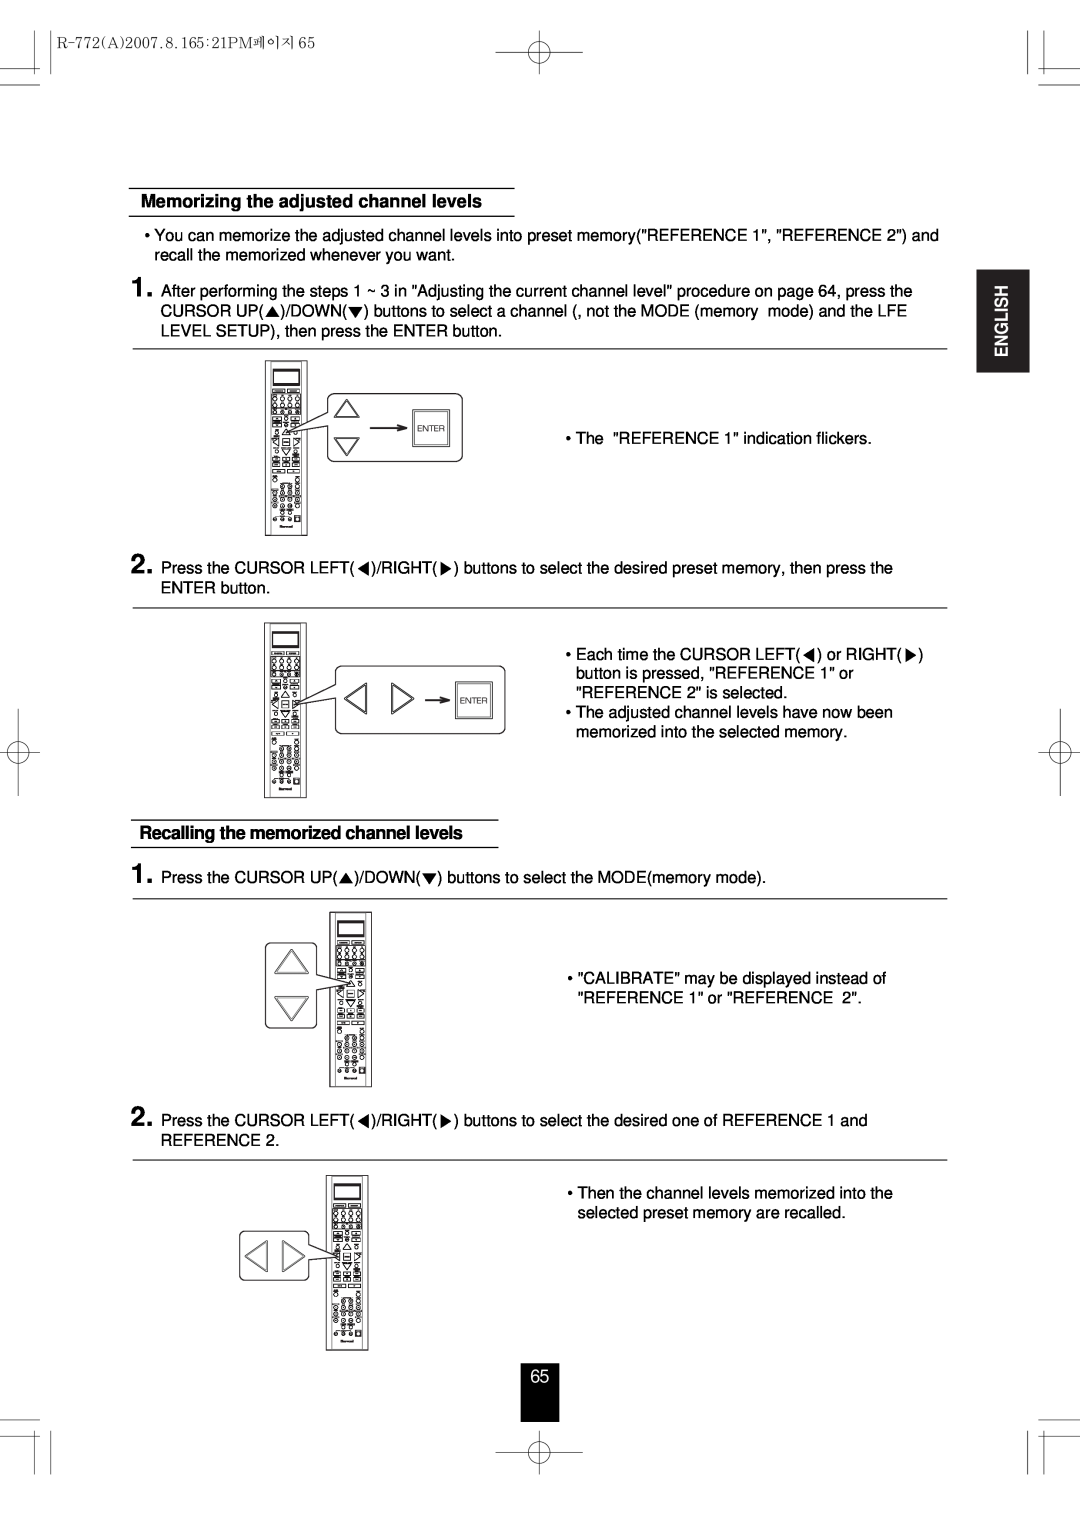 Sherwood R-772 manual Memorizing the adjusted channel levels, Recalling the memorized channel levels, English 